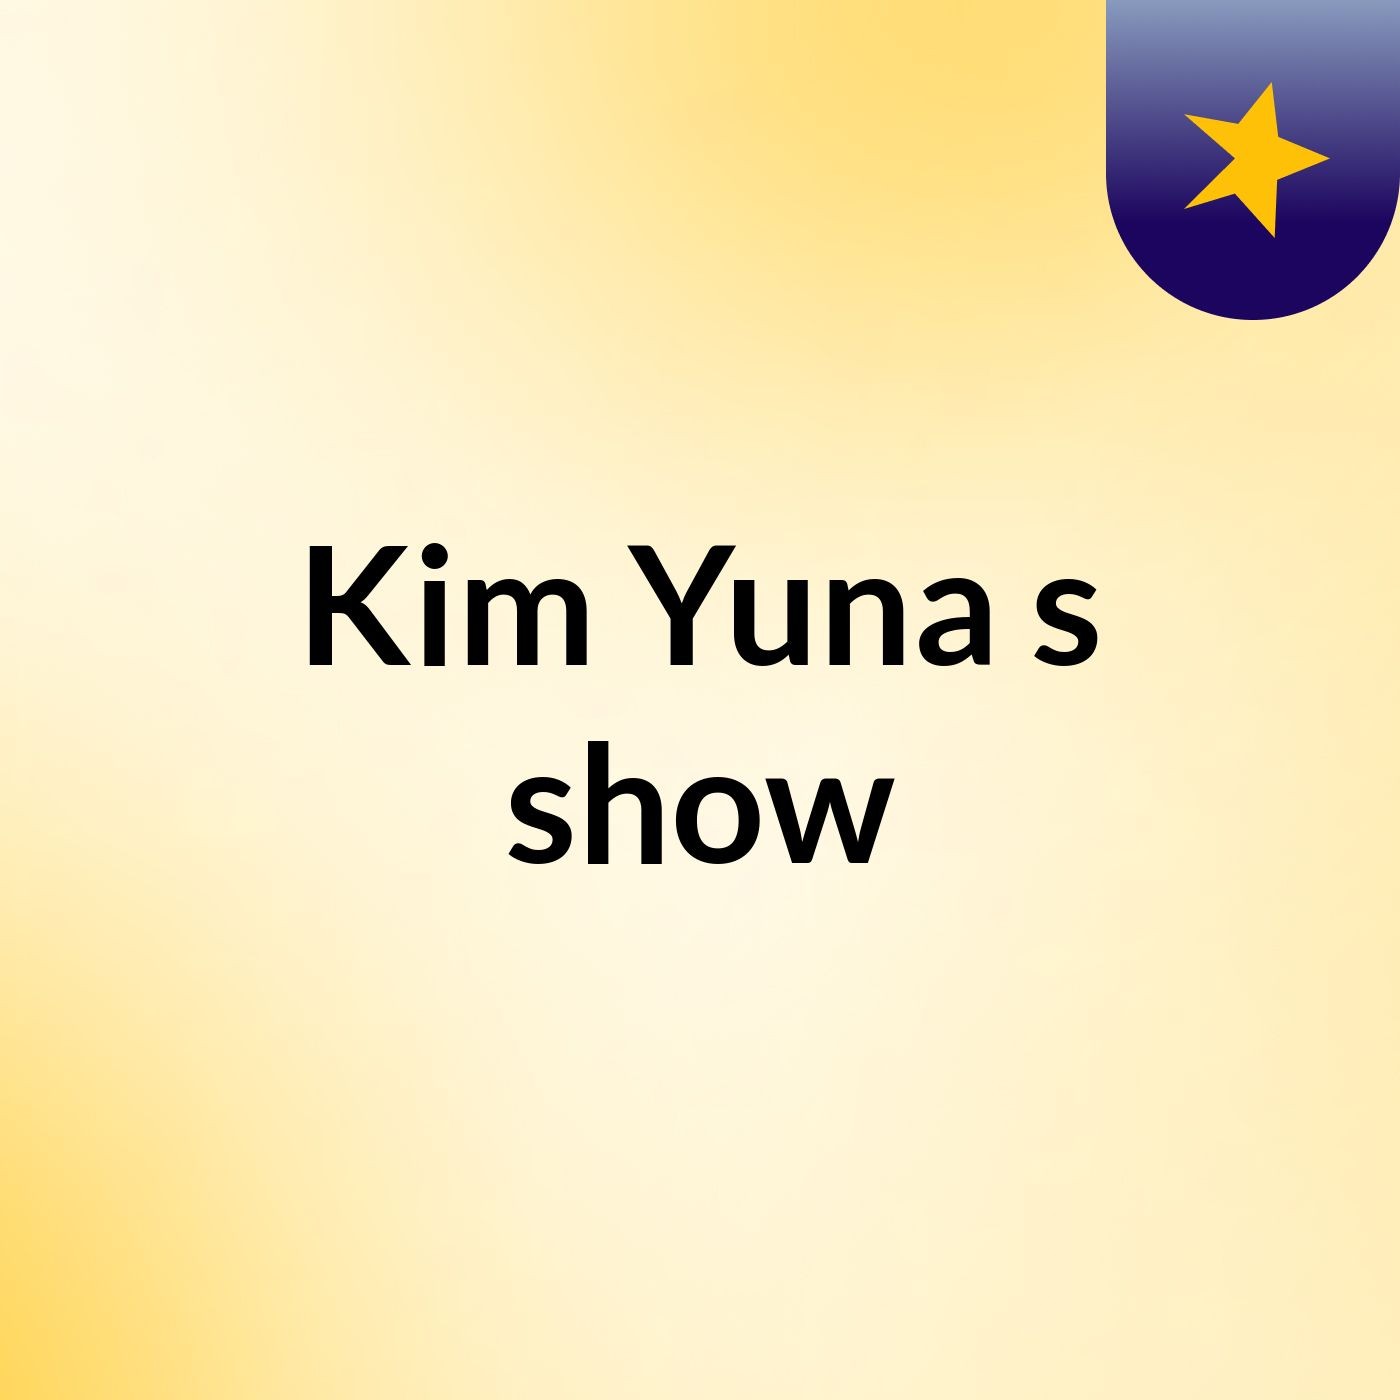 Kim Yuna's show